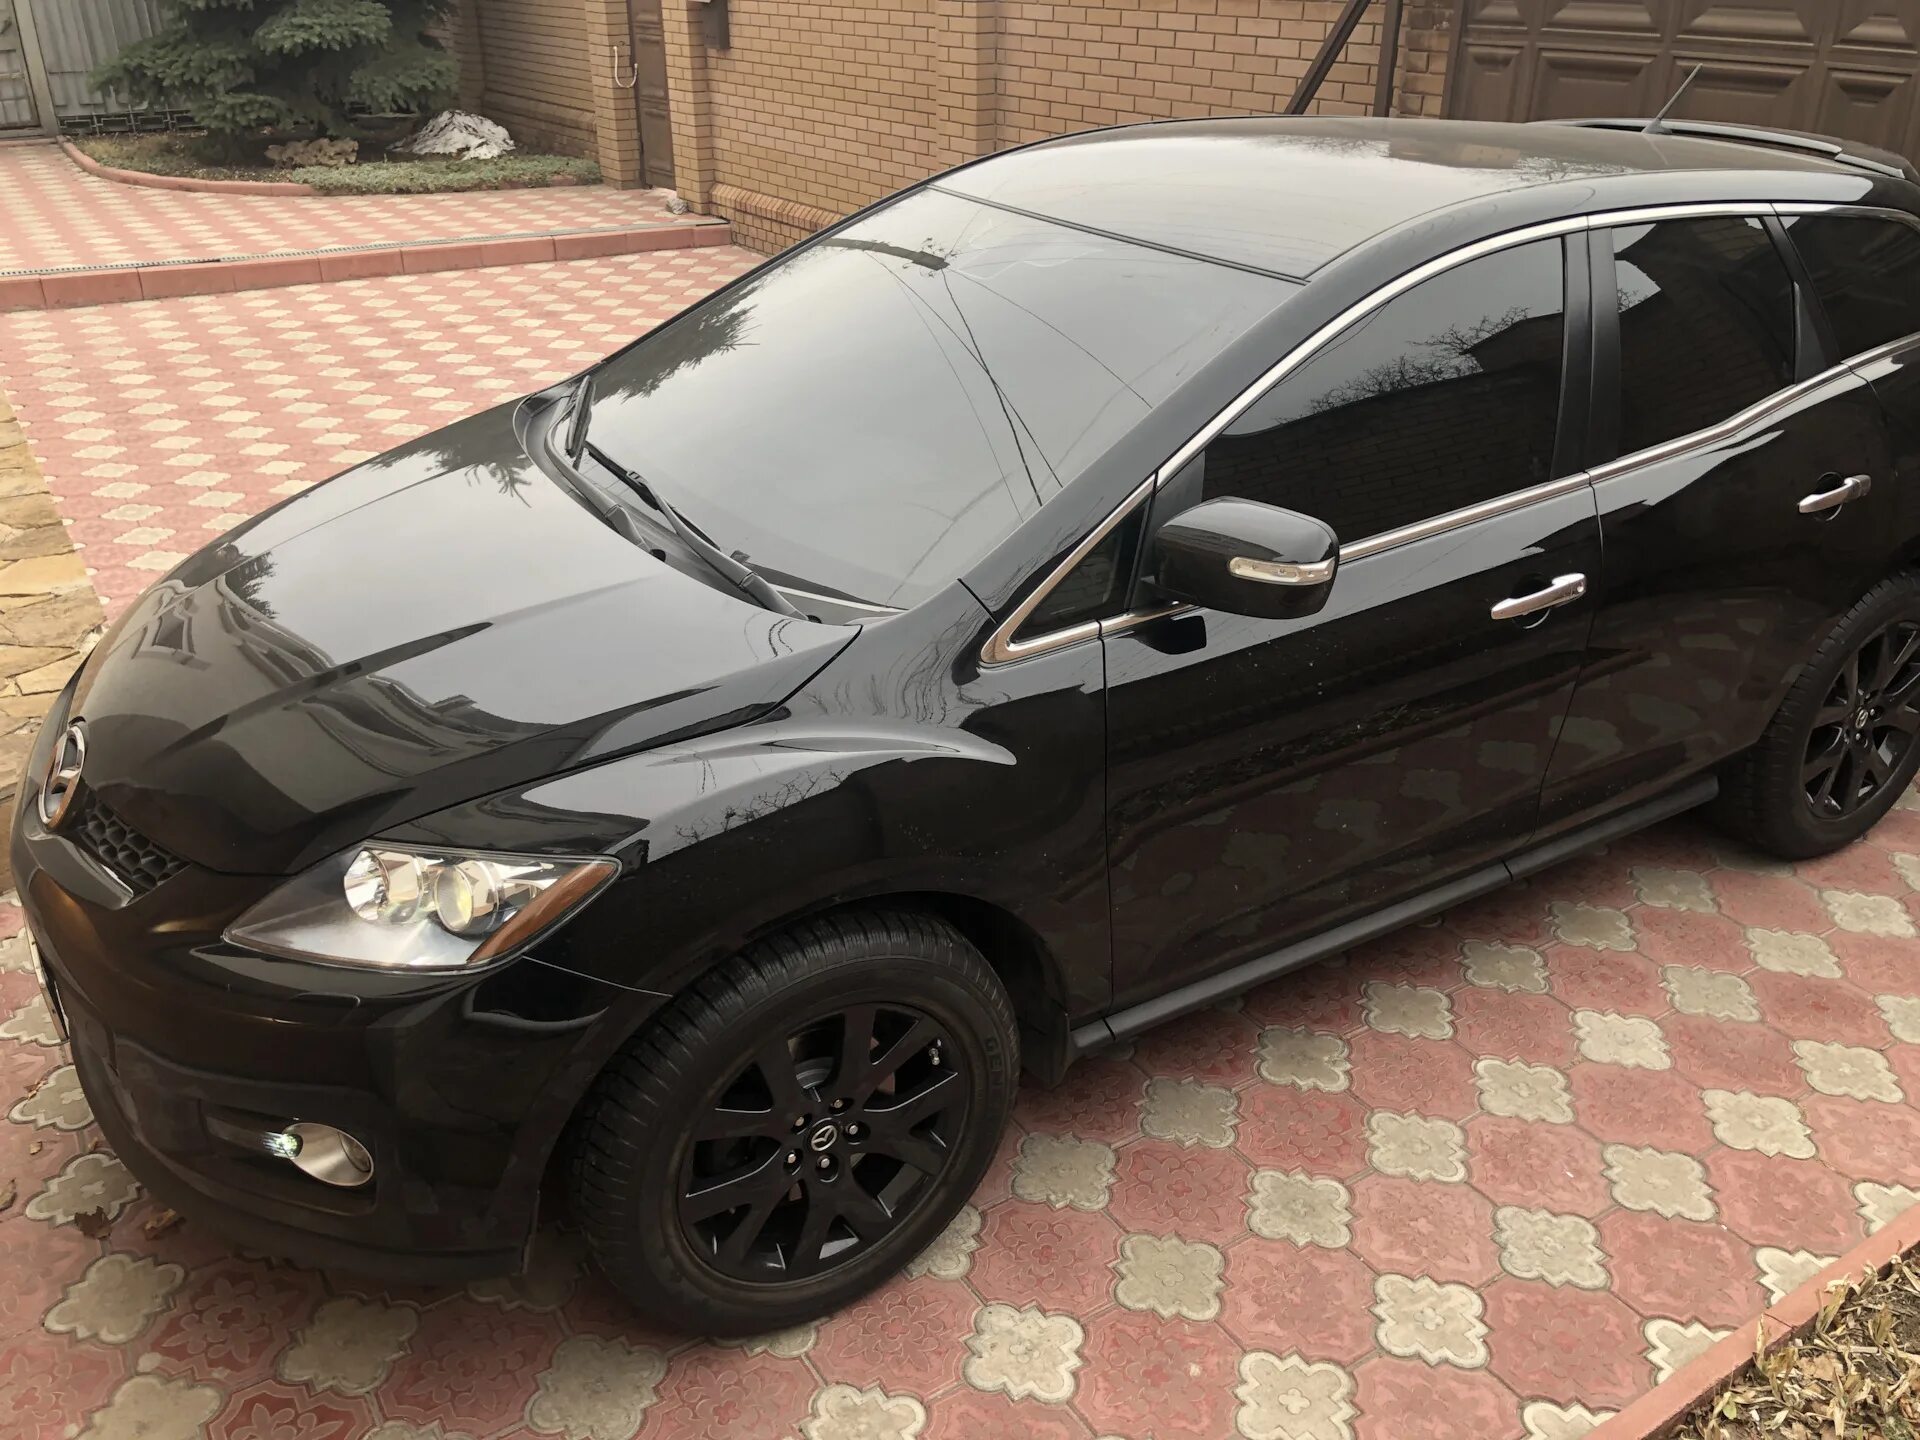 Mazda CX 7 Black. Мазда СХ 7 черная. Тонированная Мазда сх7. Мазда сх7 матовая черная. Диски мазда сх 7